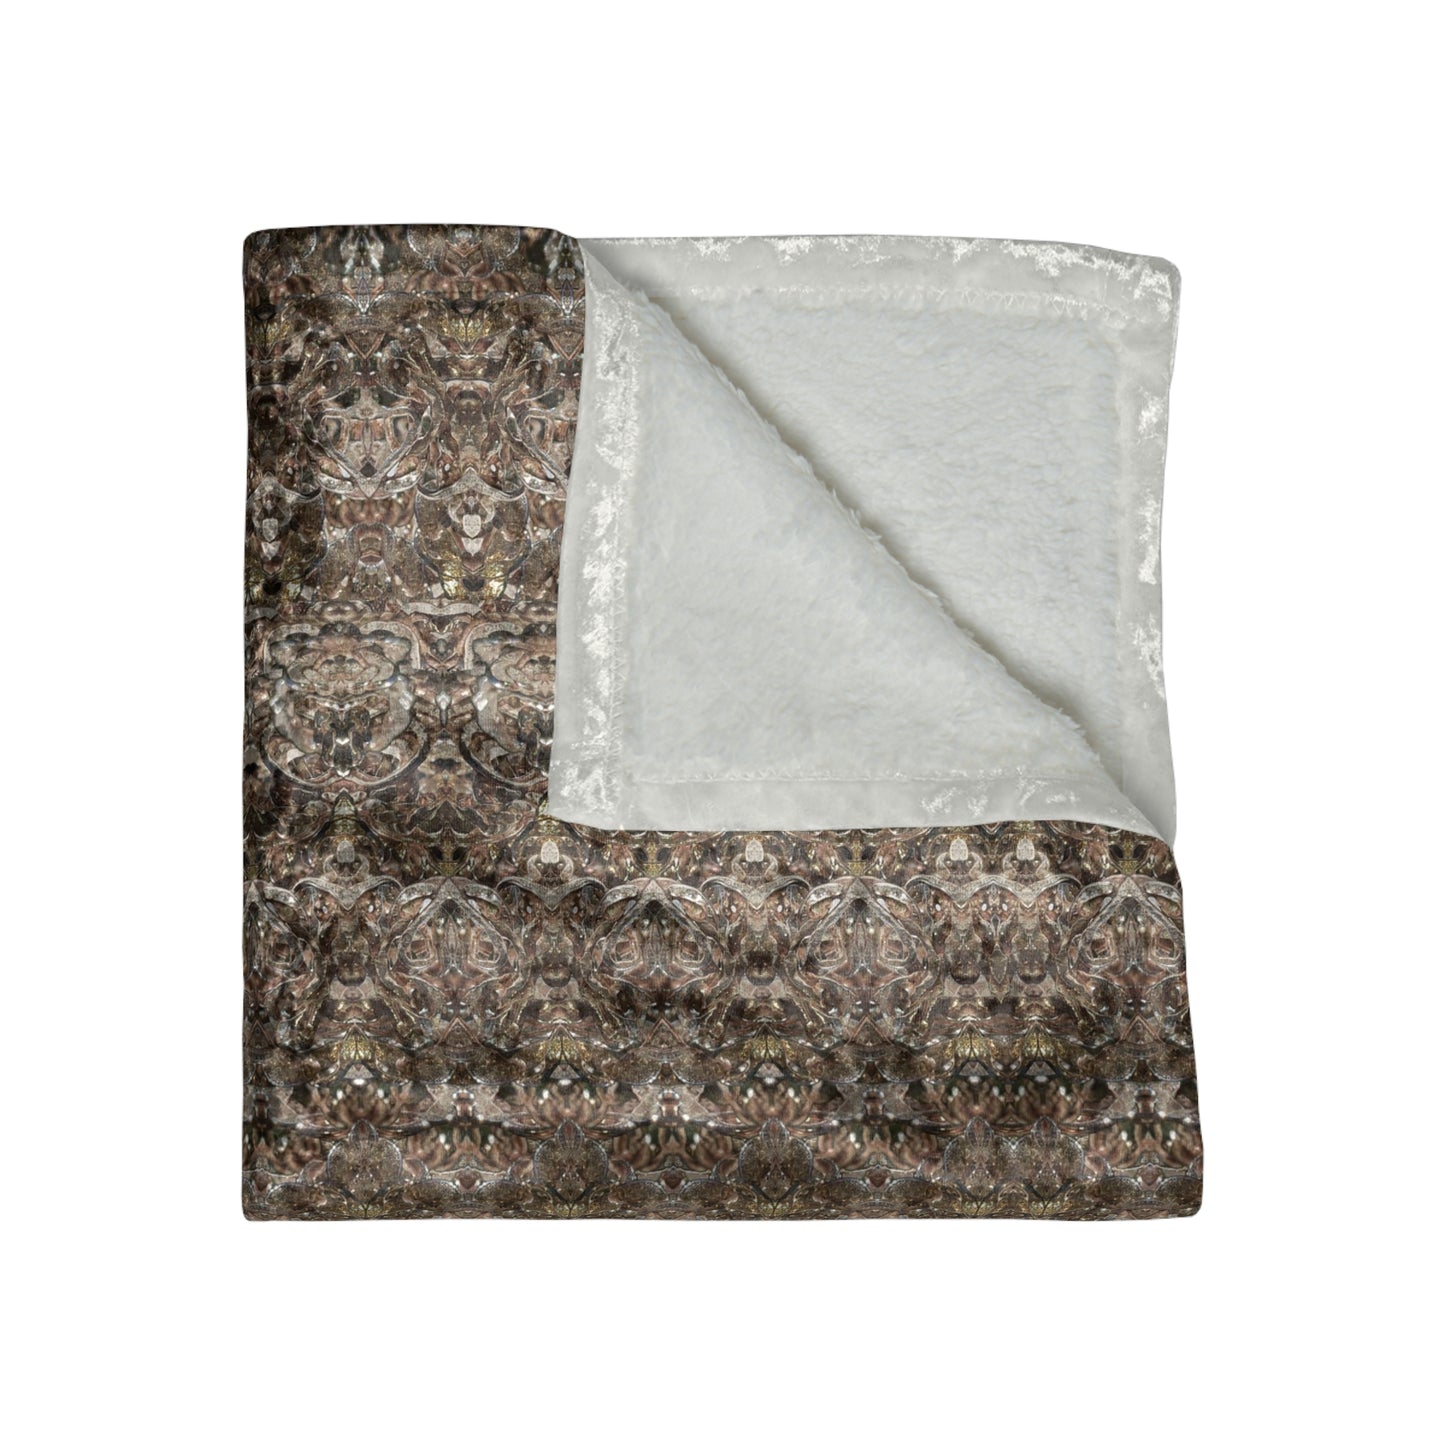 Crushed Velvet Blanket (Samhain Dream Thaw 5/15 (Quinque ex quindecim) RJSTHw2023 RJS